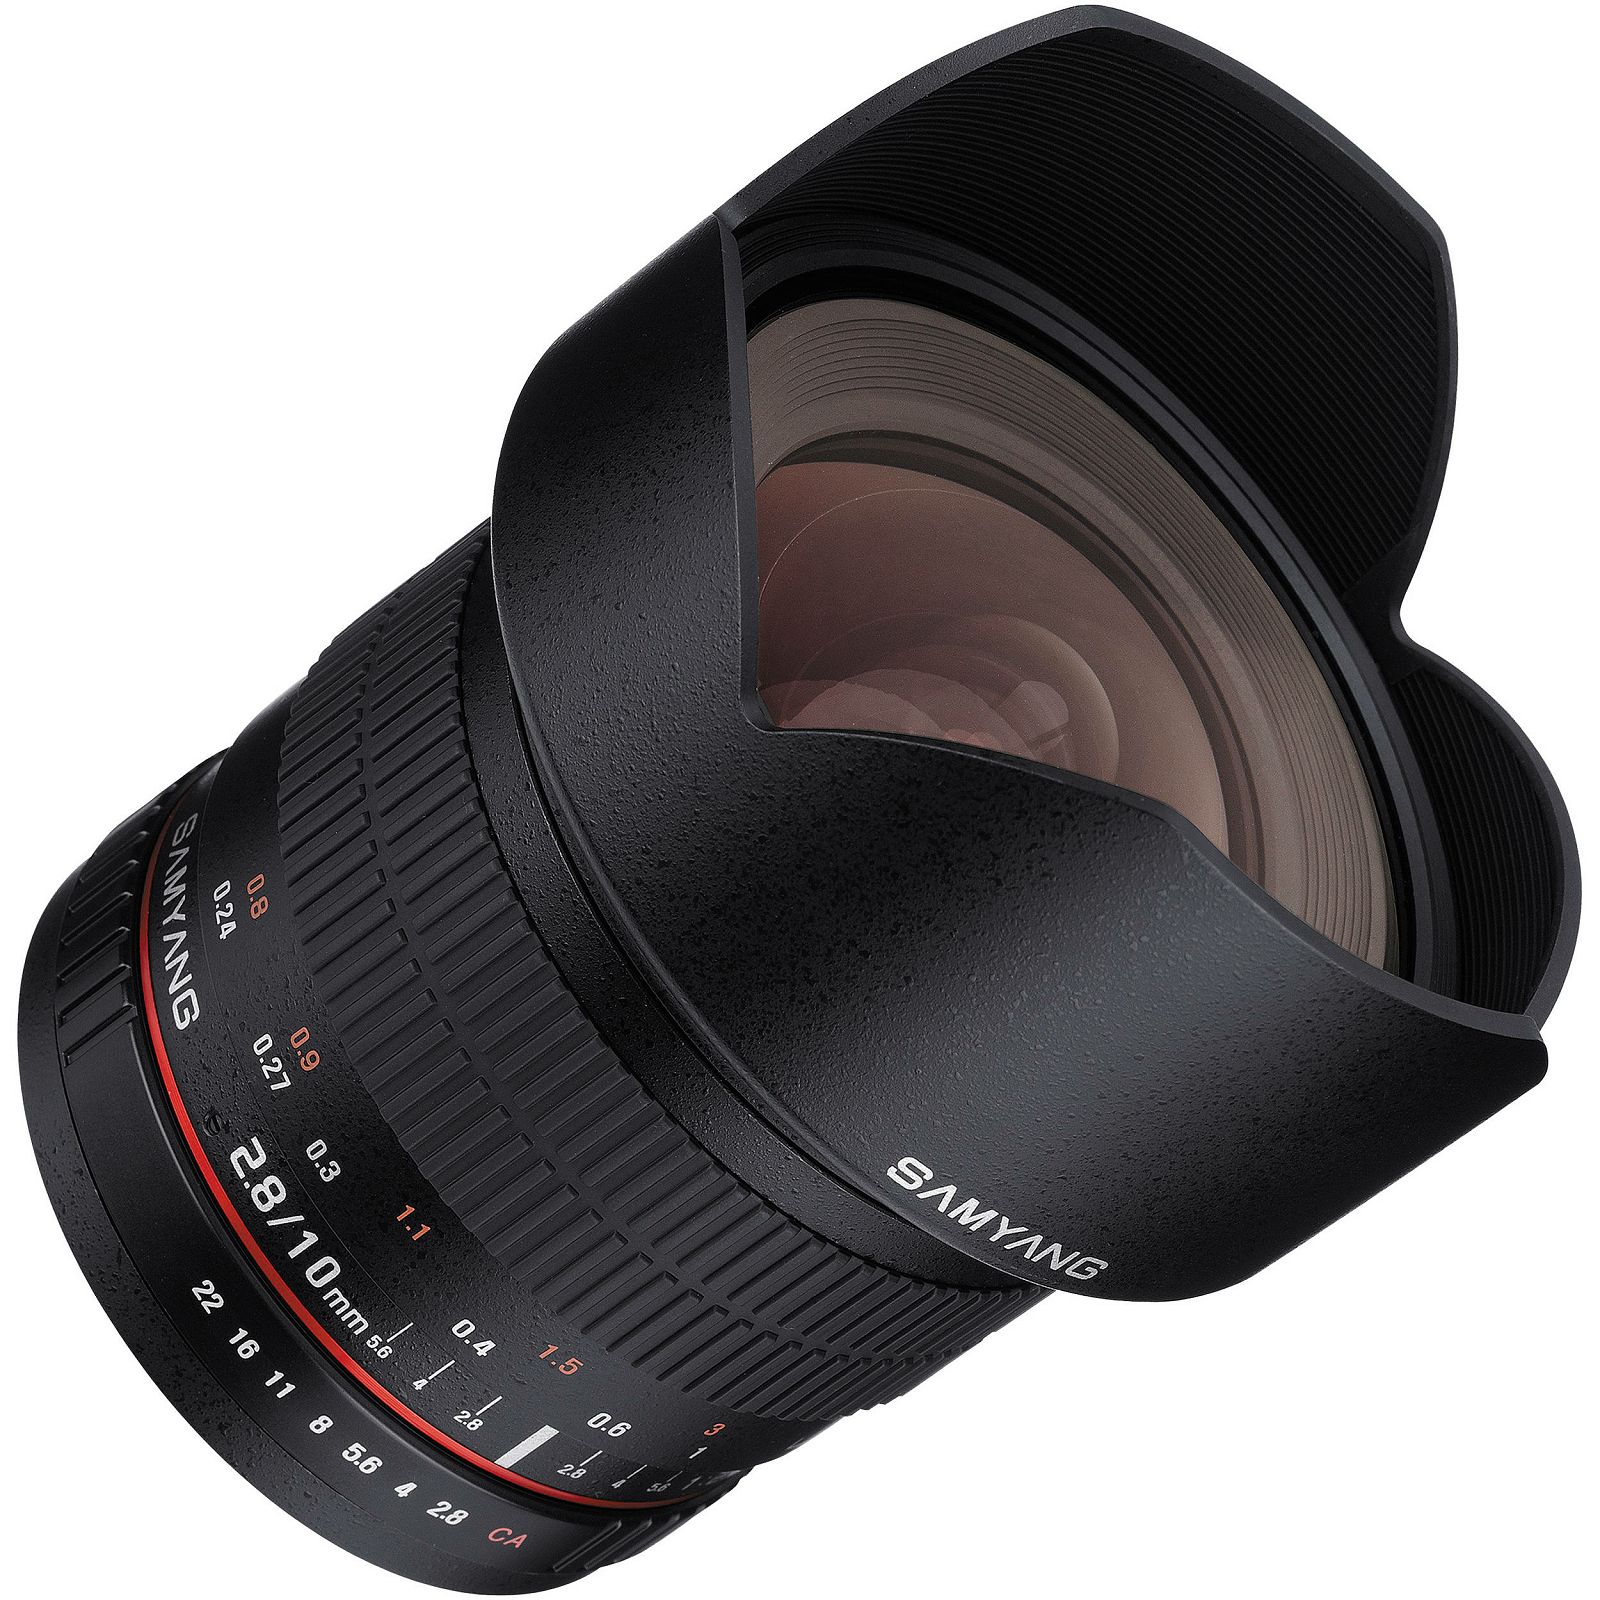 Samyang 10mm f/2.8 ED AS NCS CS za Canon ultra širokokutni objektiv